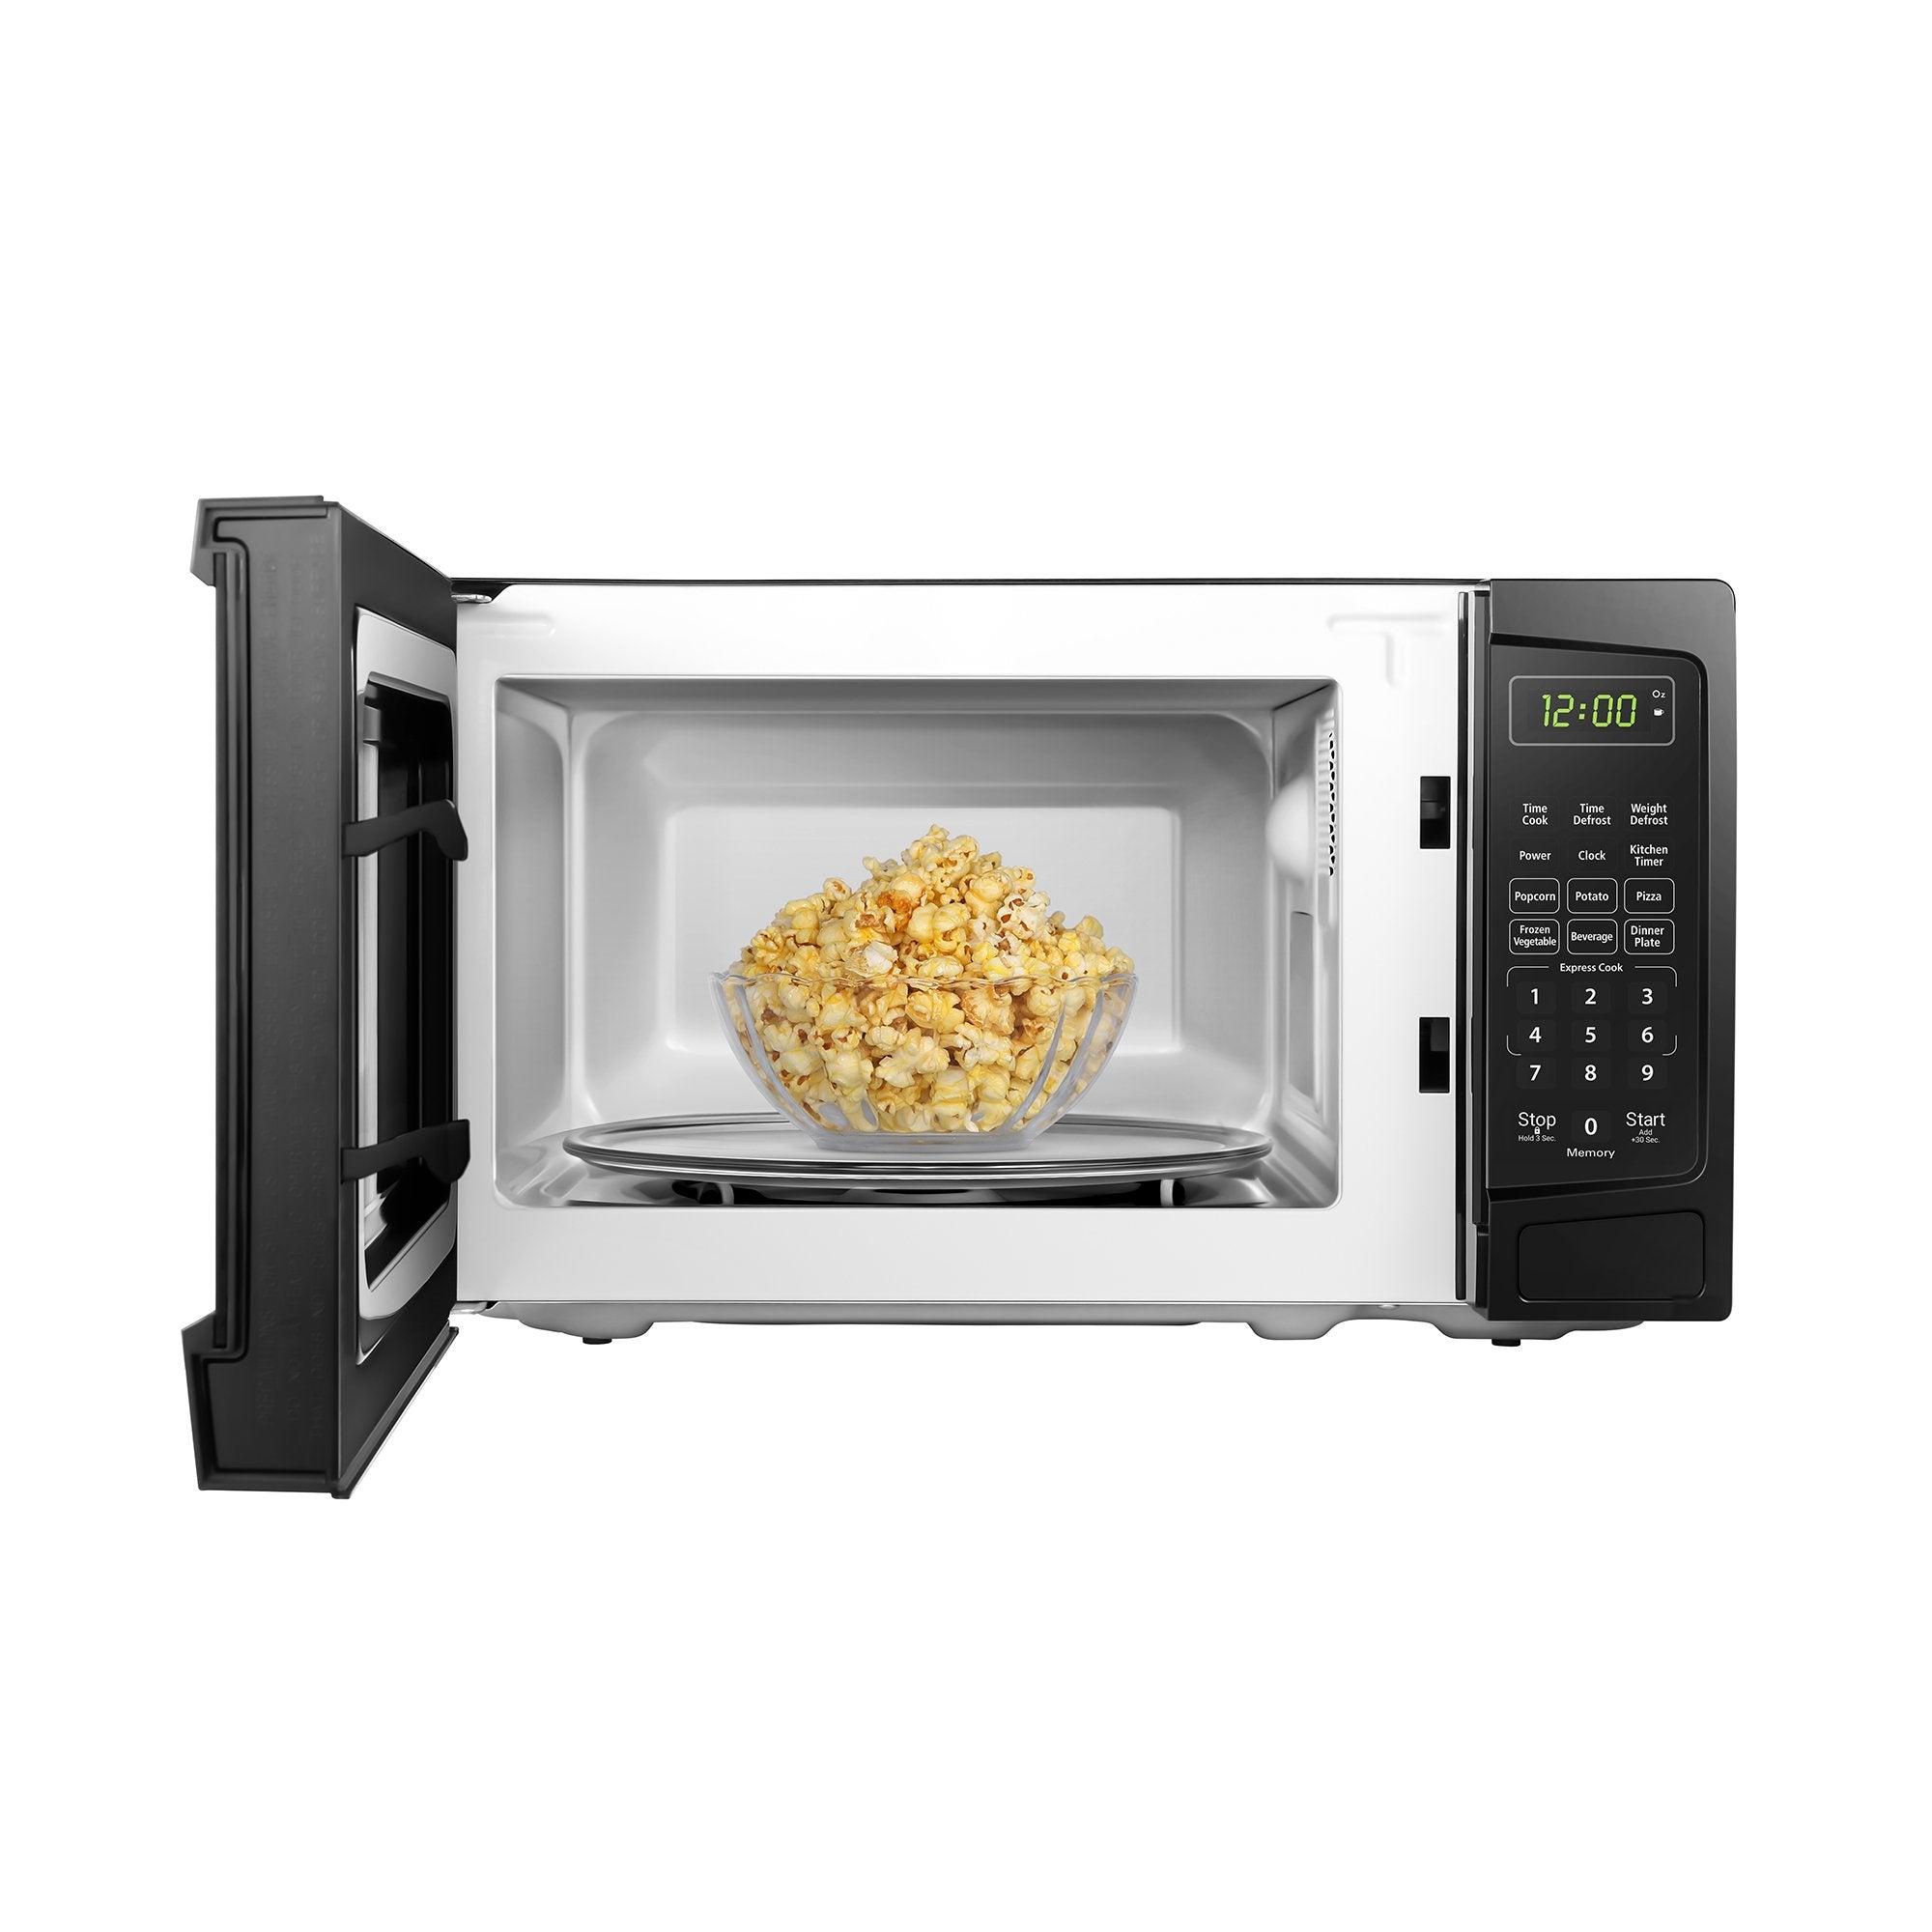 Danby Countertop Microwaves DBMW0920BBB